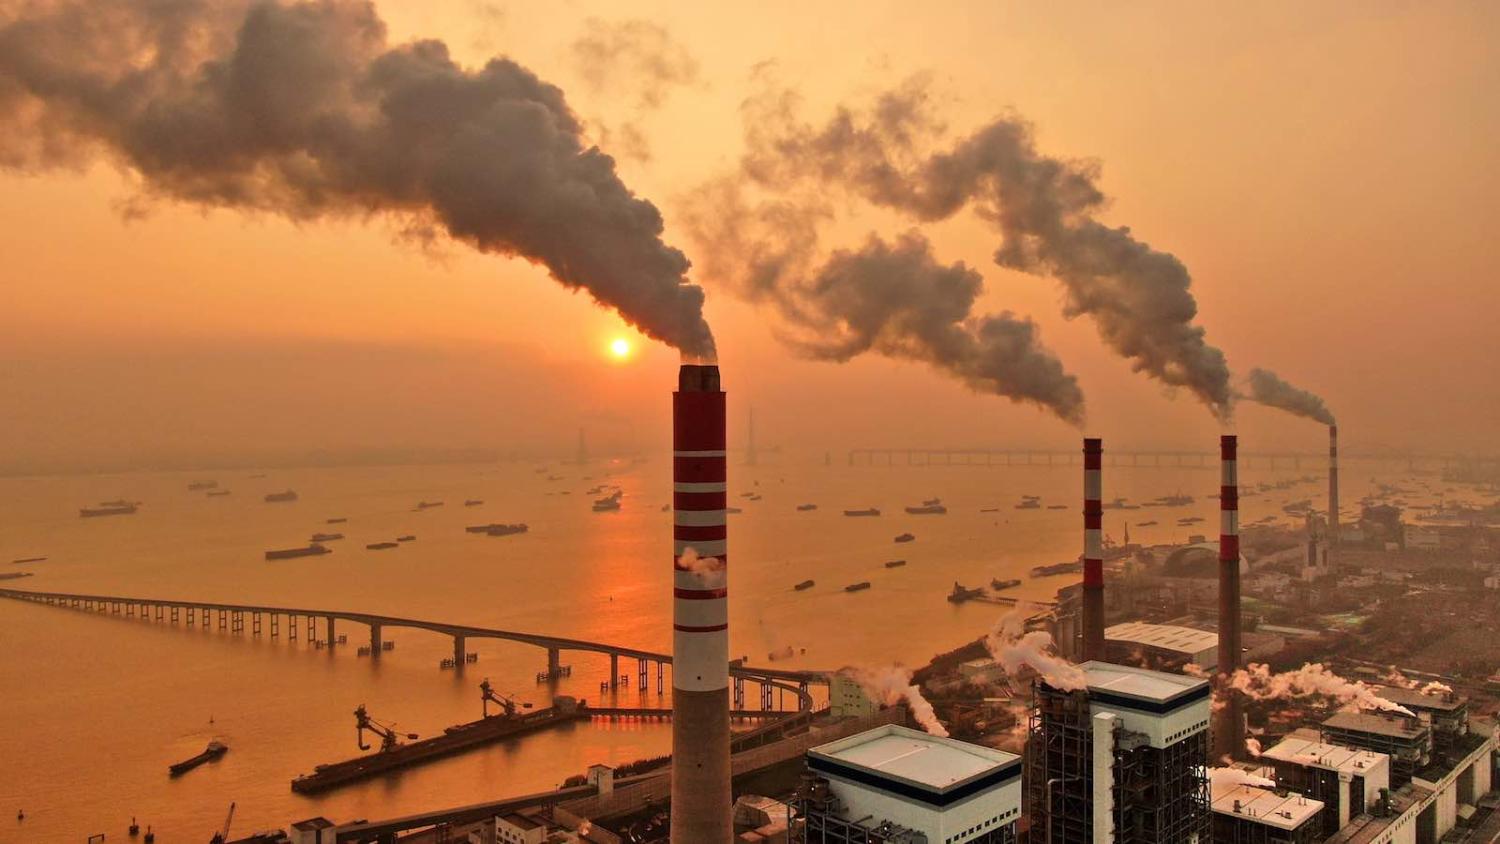 Nantong power station, a 3400-megawatt coal-fired power station in Jiangsu Province, China (Photo: Barcroft Media via Getty)